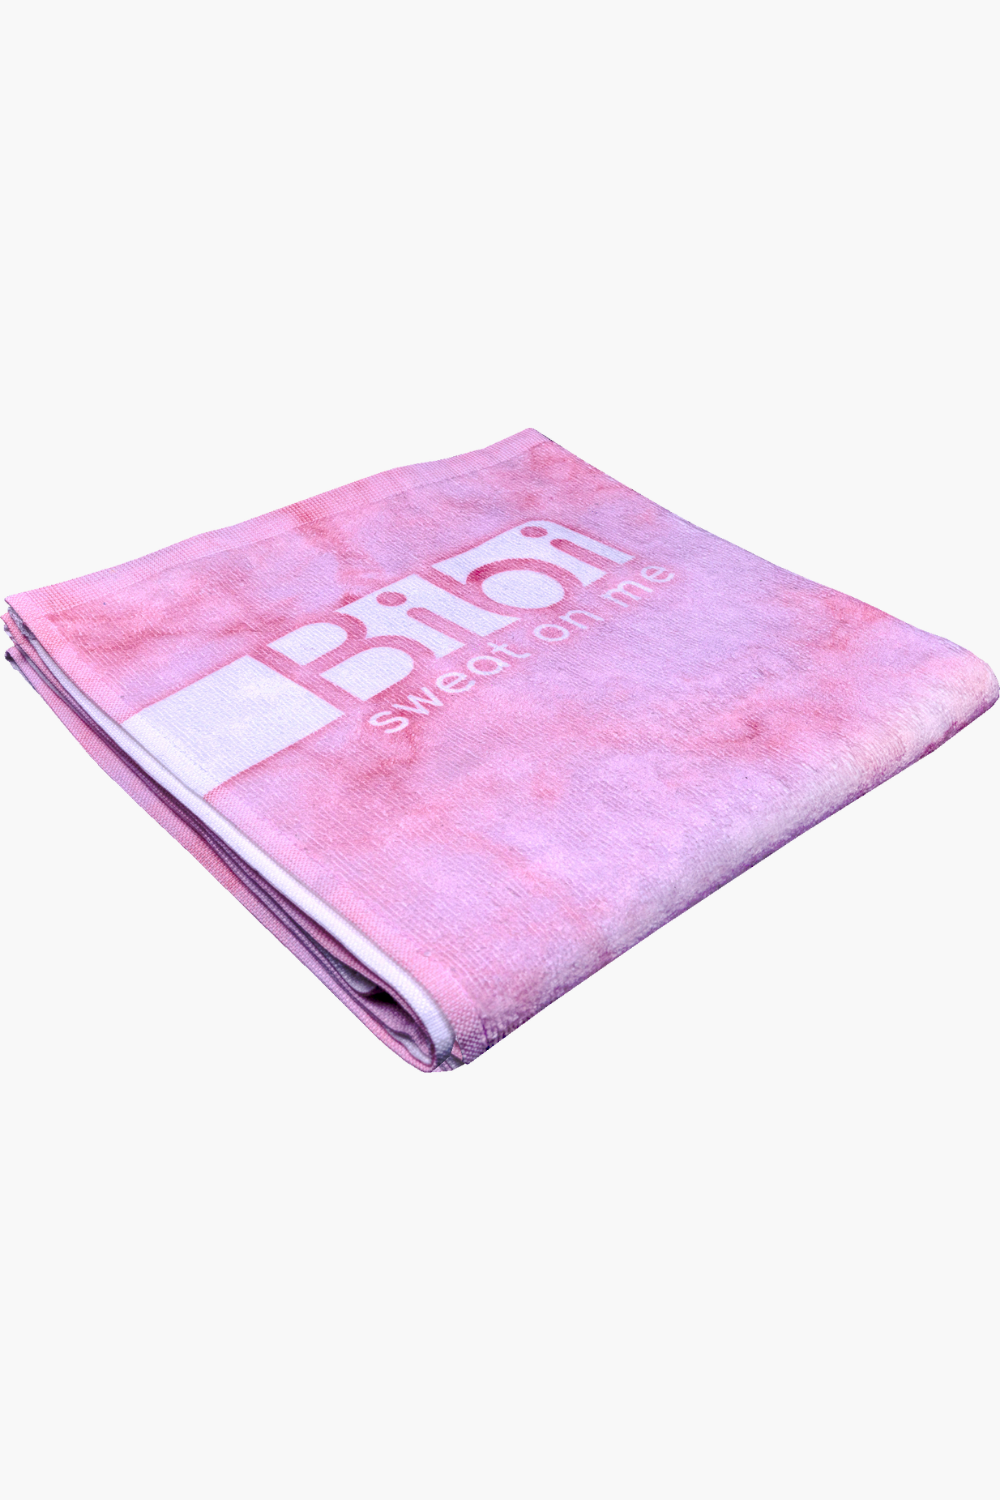 serviette de sport Bibi mybibi marbre rose